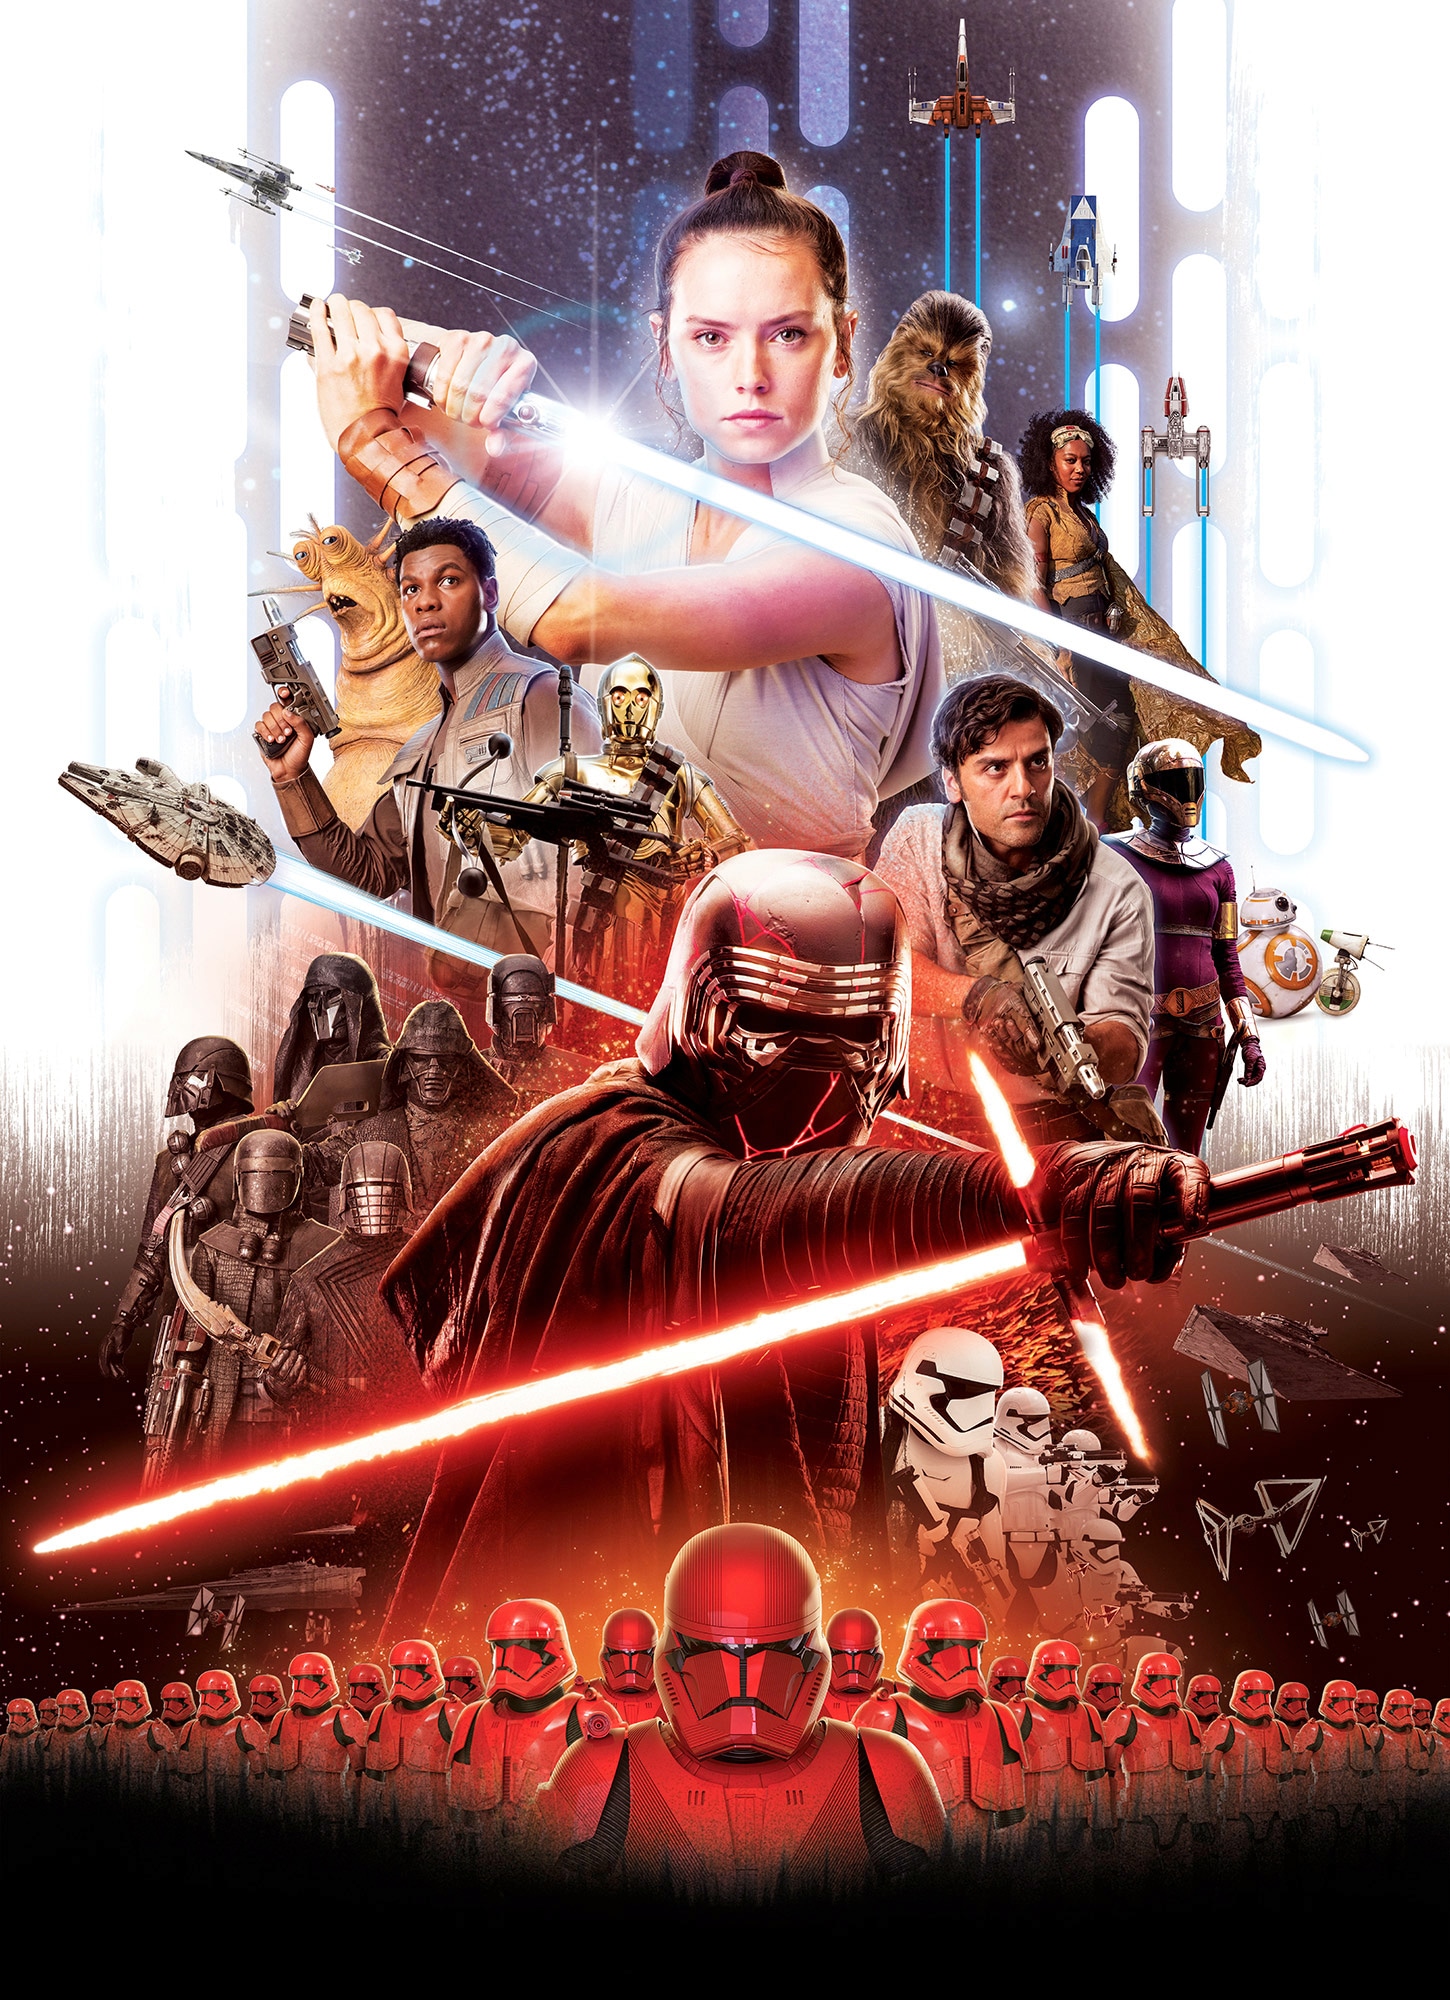 Fototapete »STAR WARS EP9 Movie Poster Rey«, 184x254 cm (Breite x Höhe), inklusive...